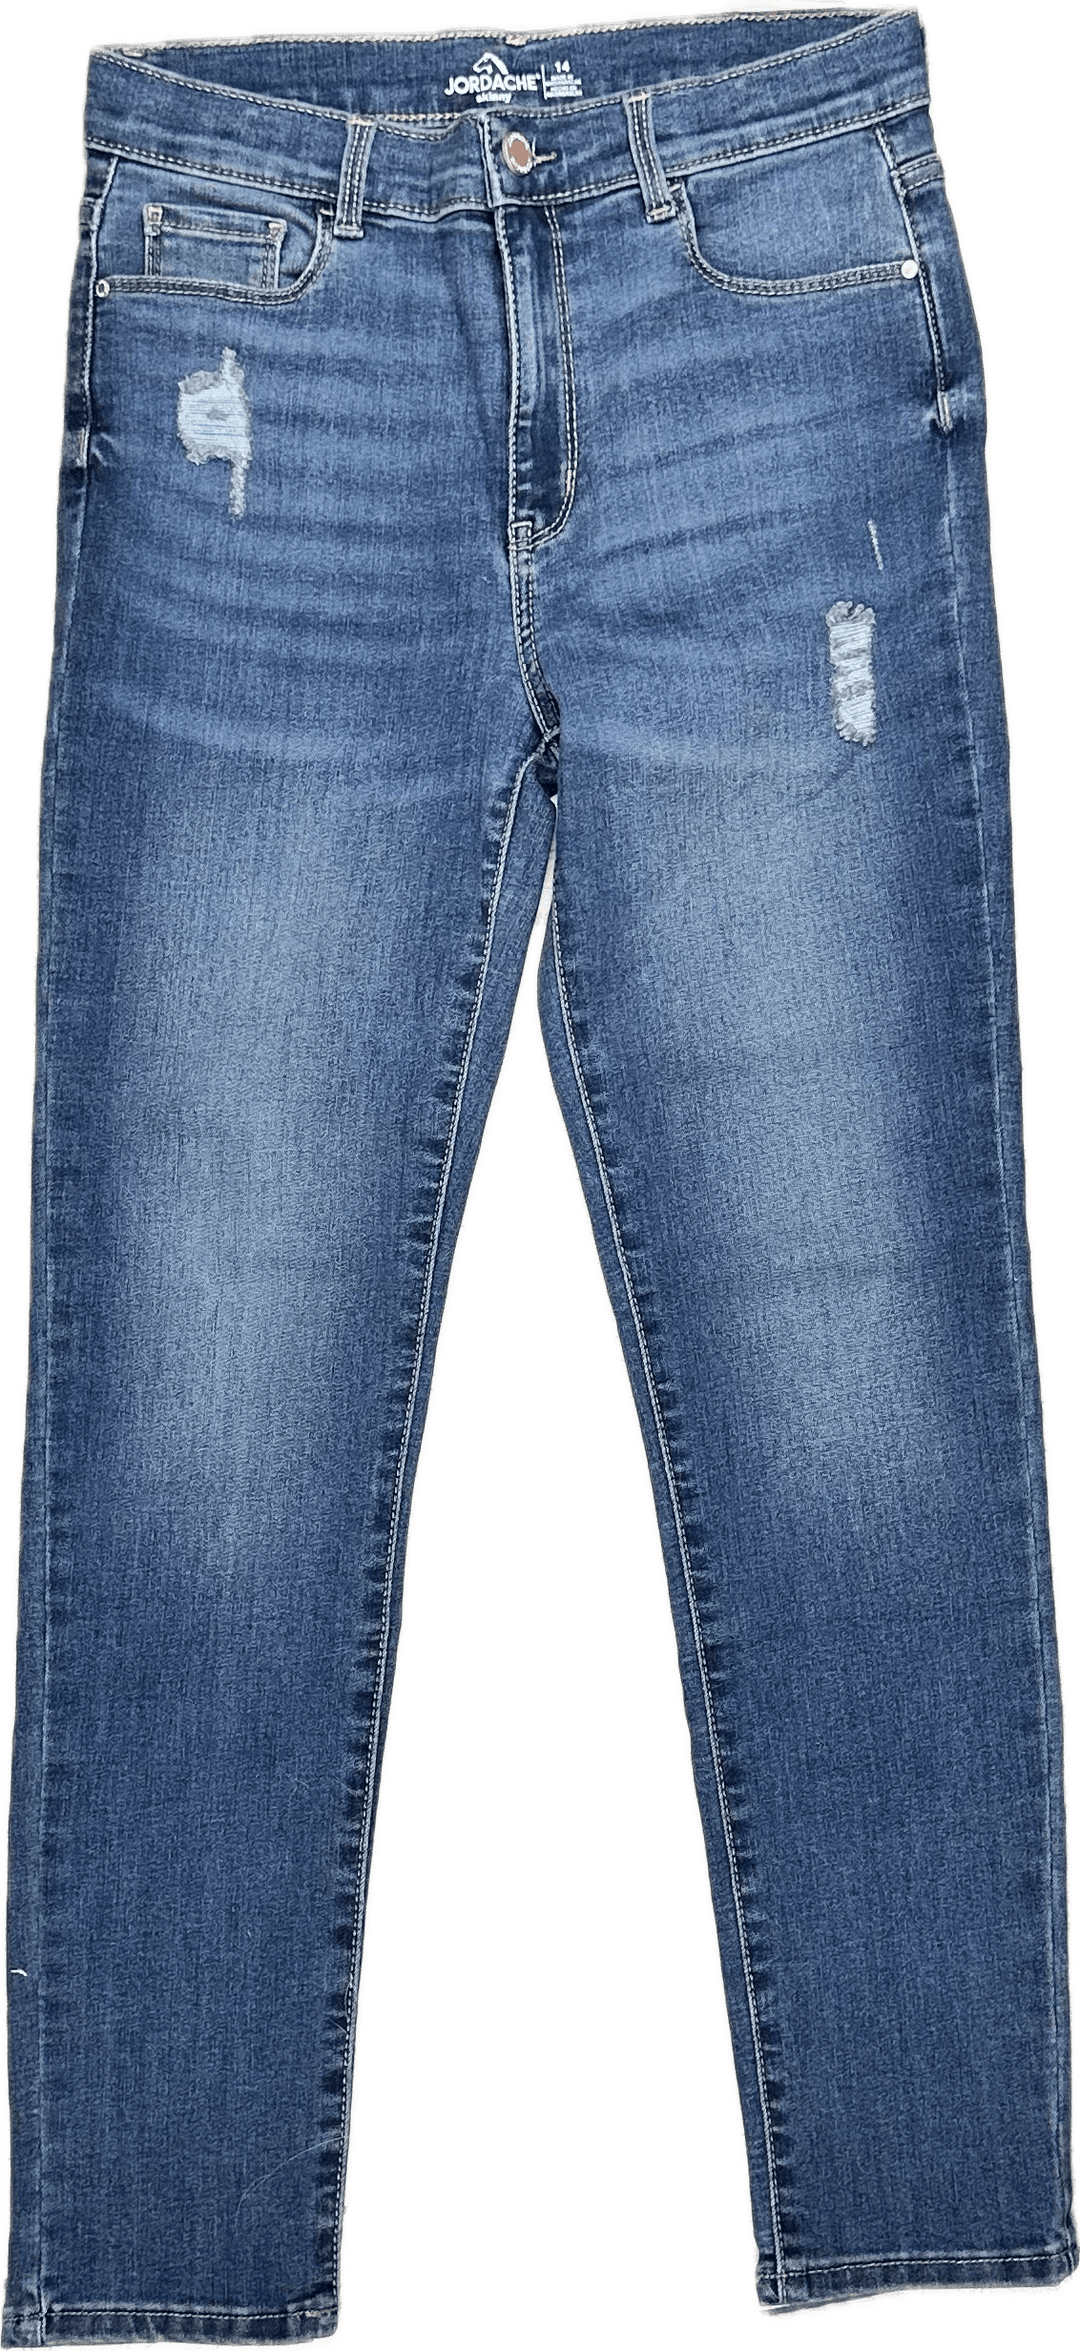 Jordache Girls 'Skinny' Stretch Blue Jeans - Size 14Y - Jean Pool